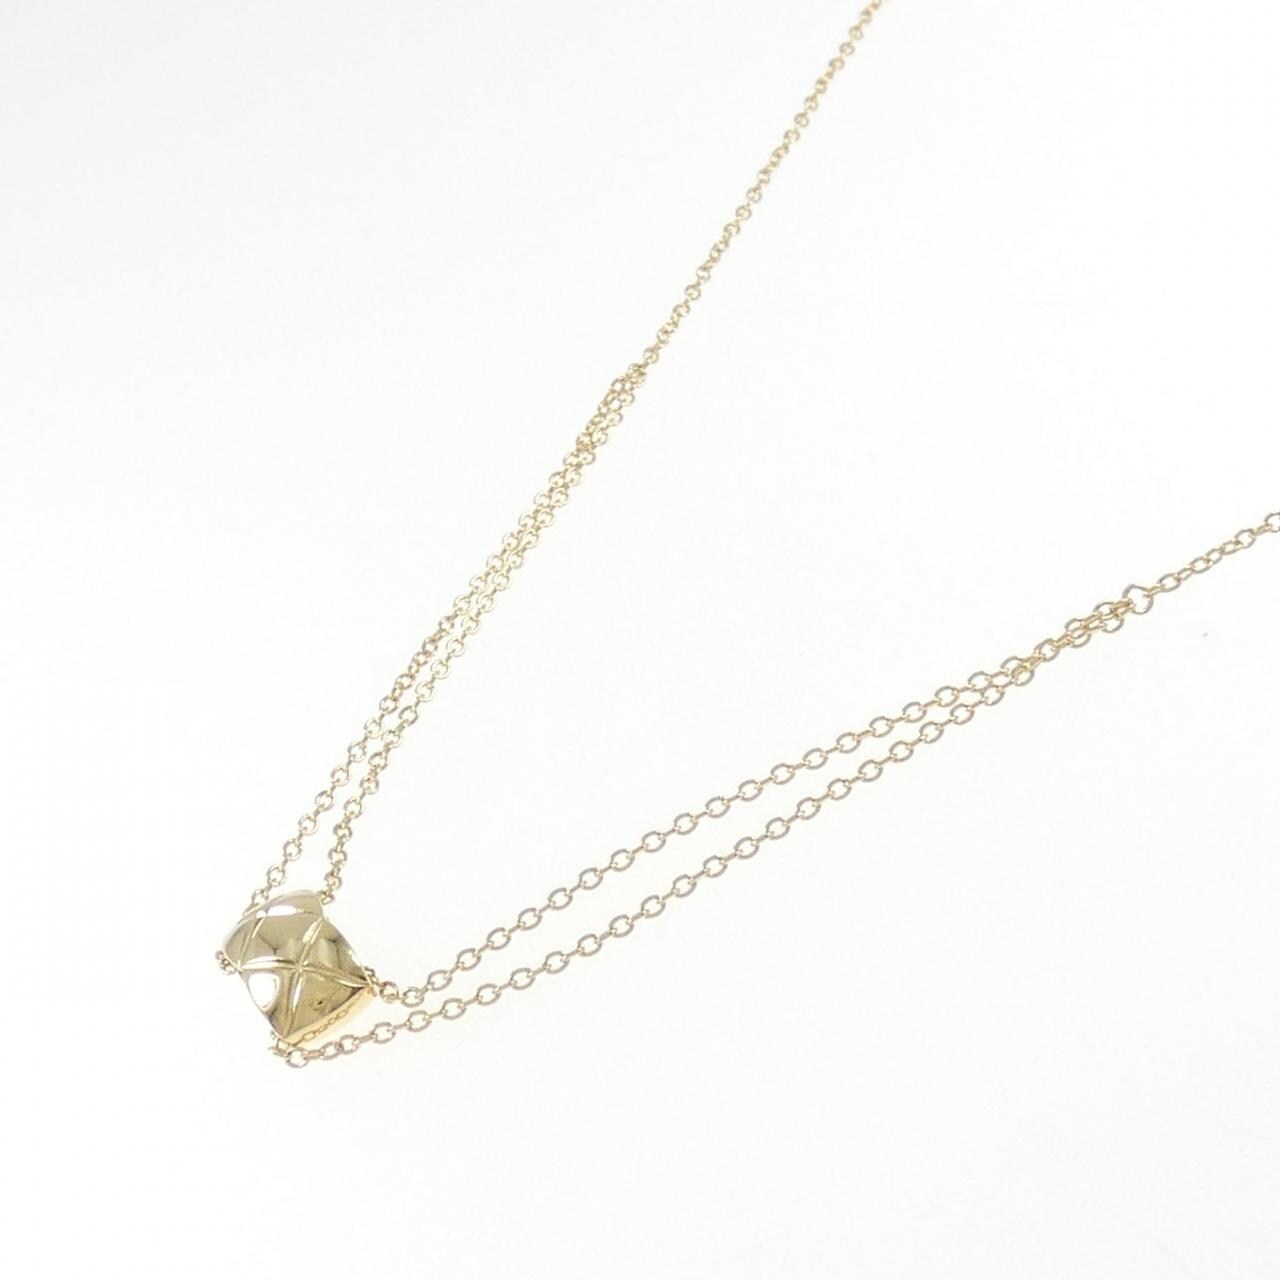 Shop CHANEL Coco Crush necklace (J12307) by Avity | BUYMA